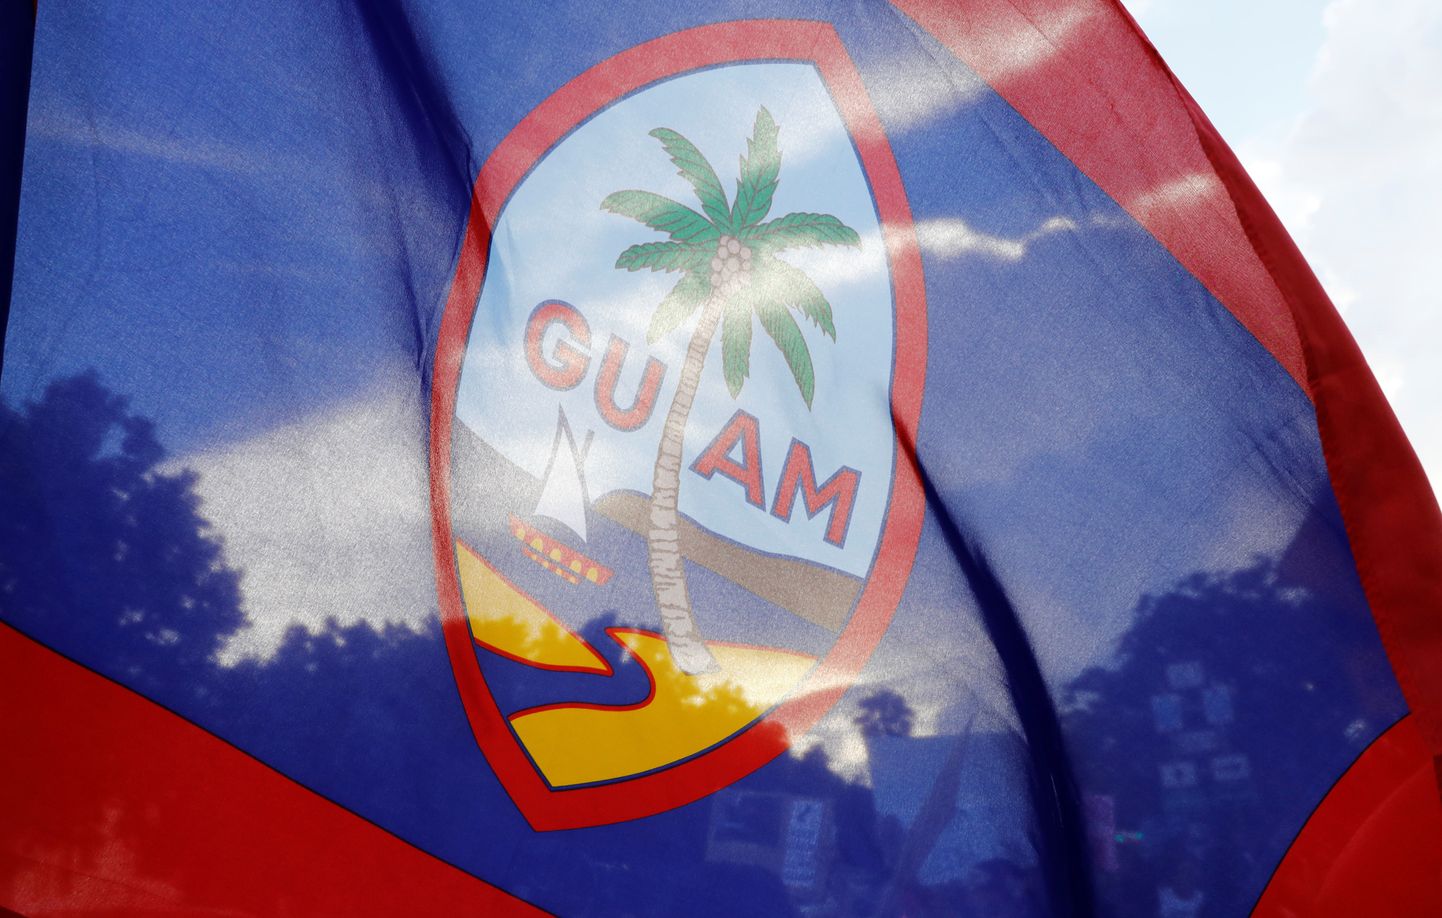 Guami lipp